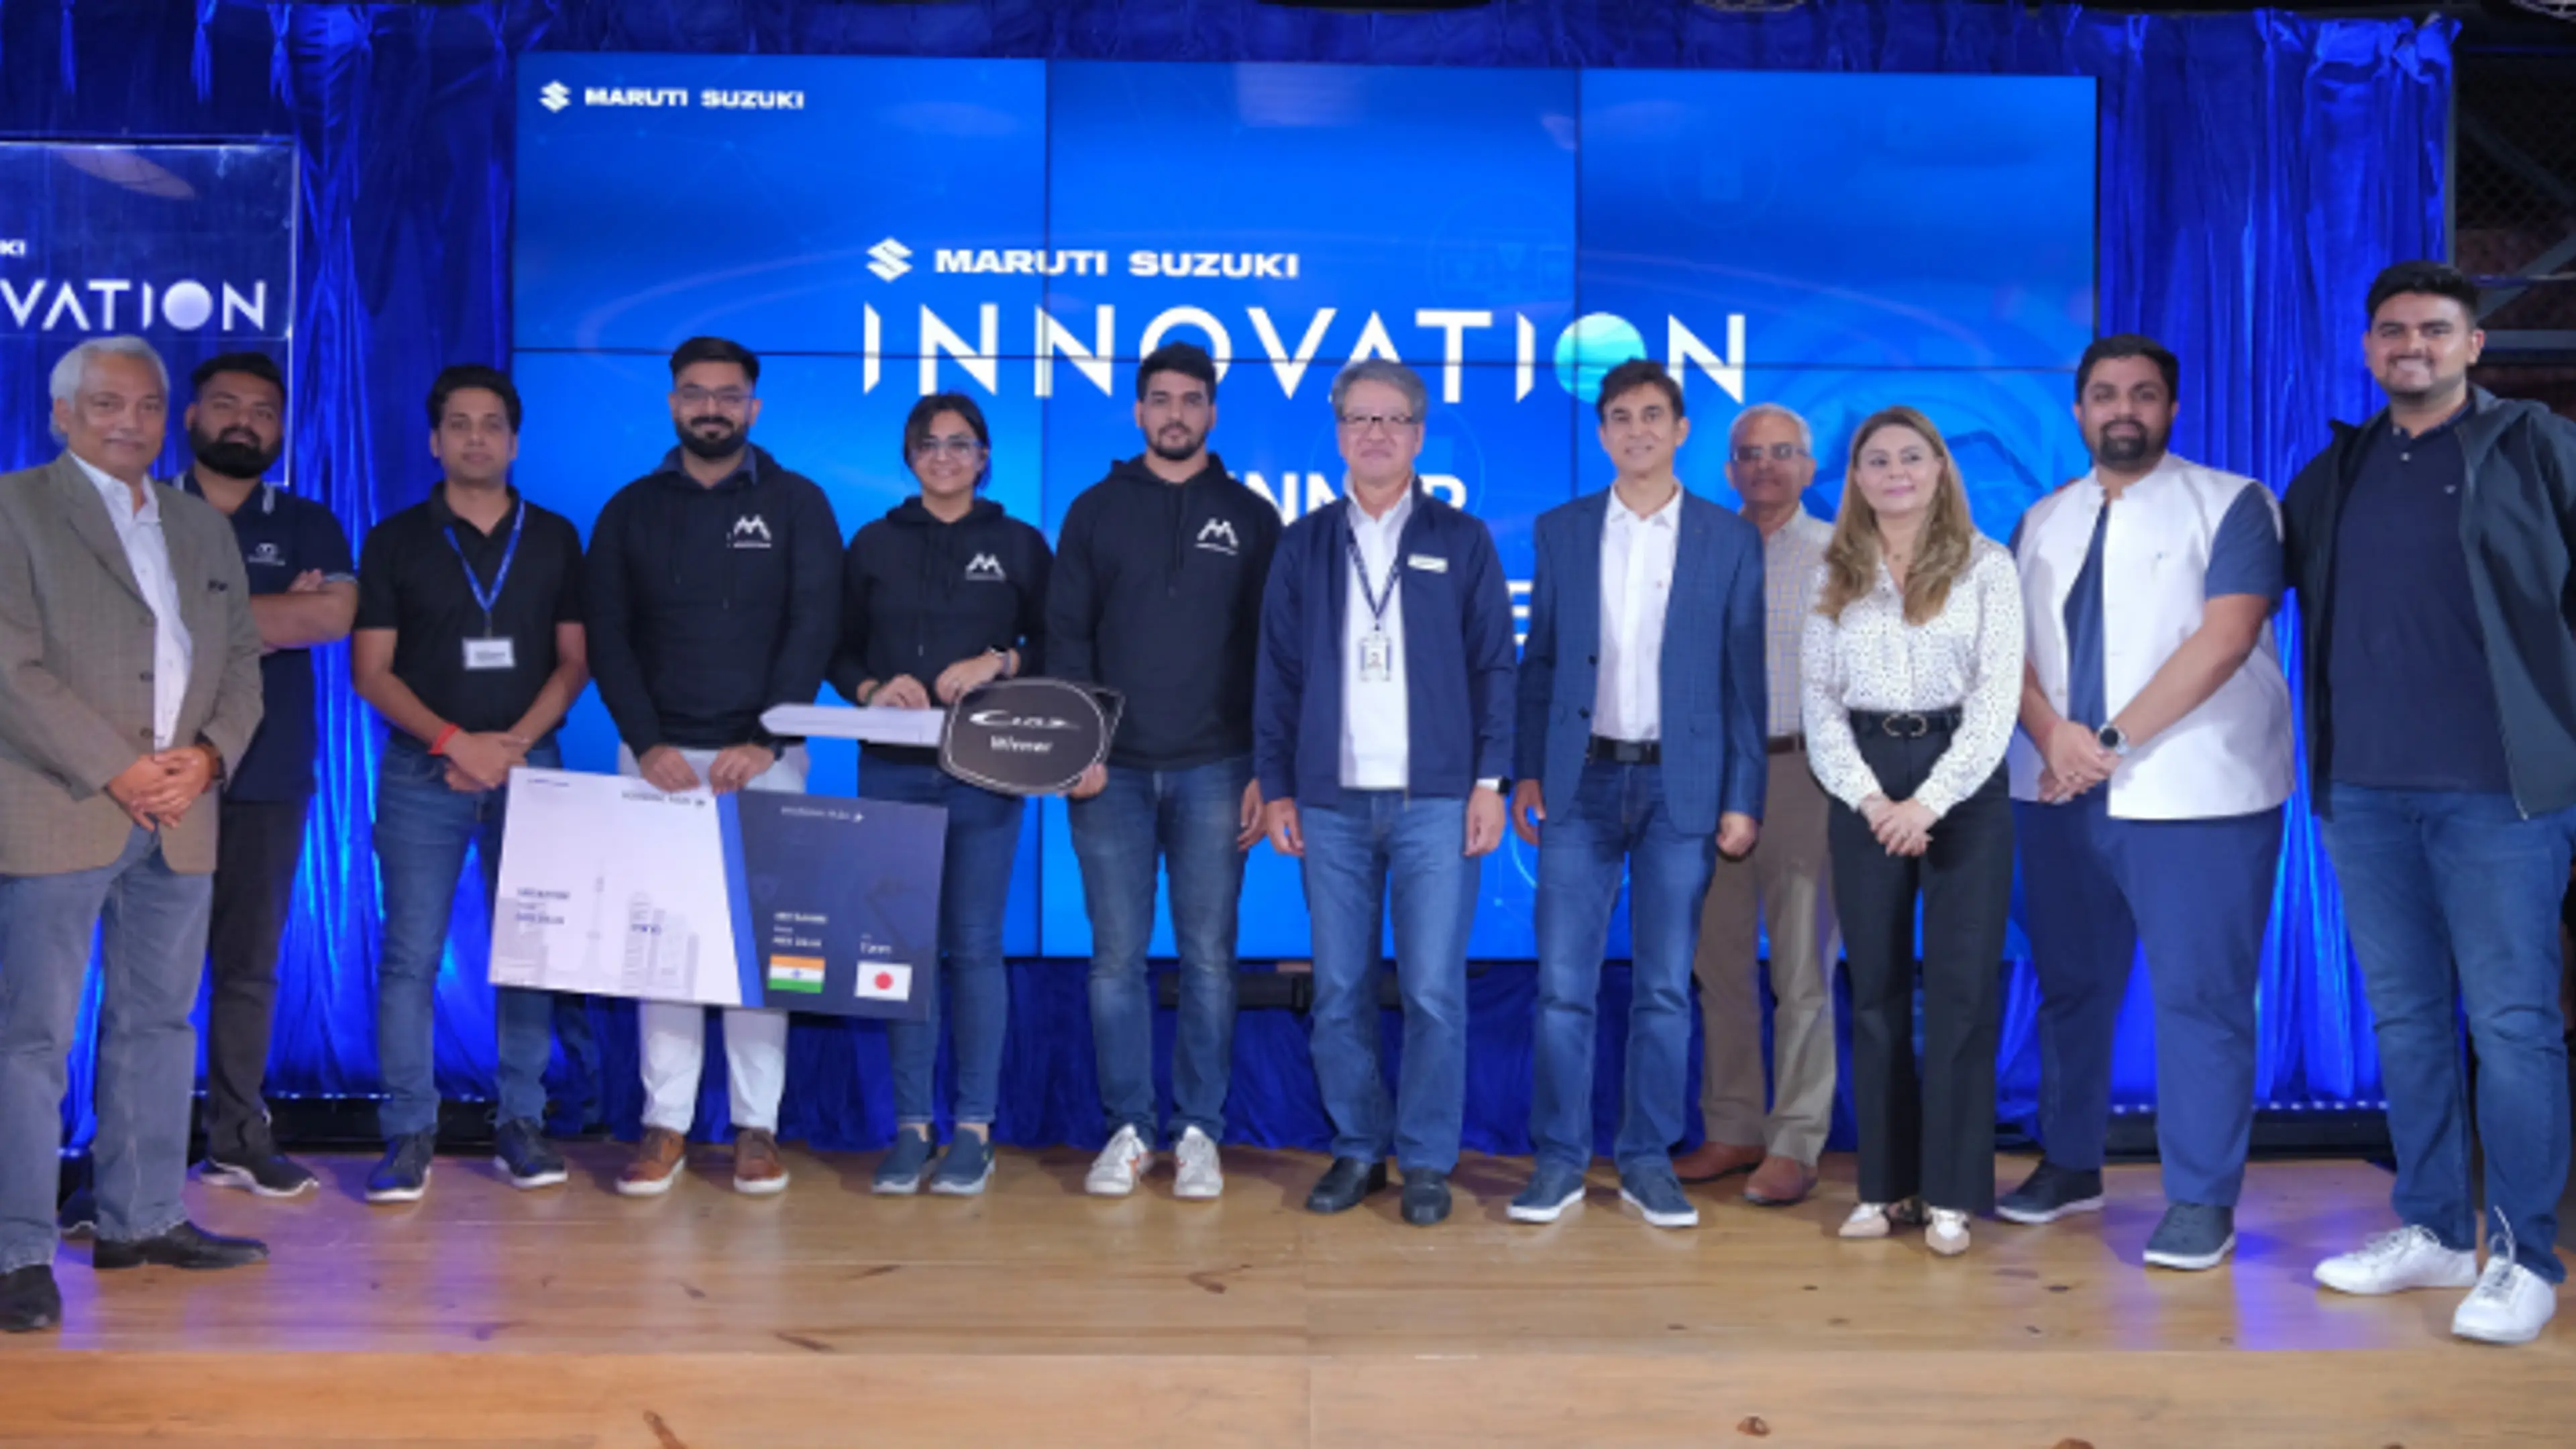 Maruti Suzuki expands its accelerator programme to include global startups